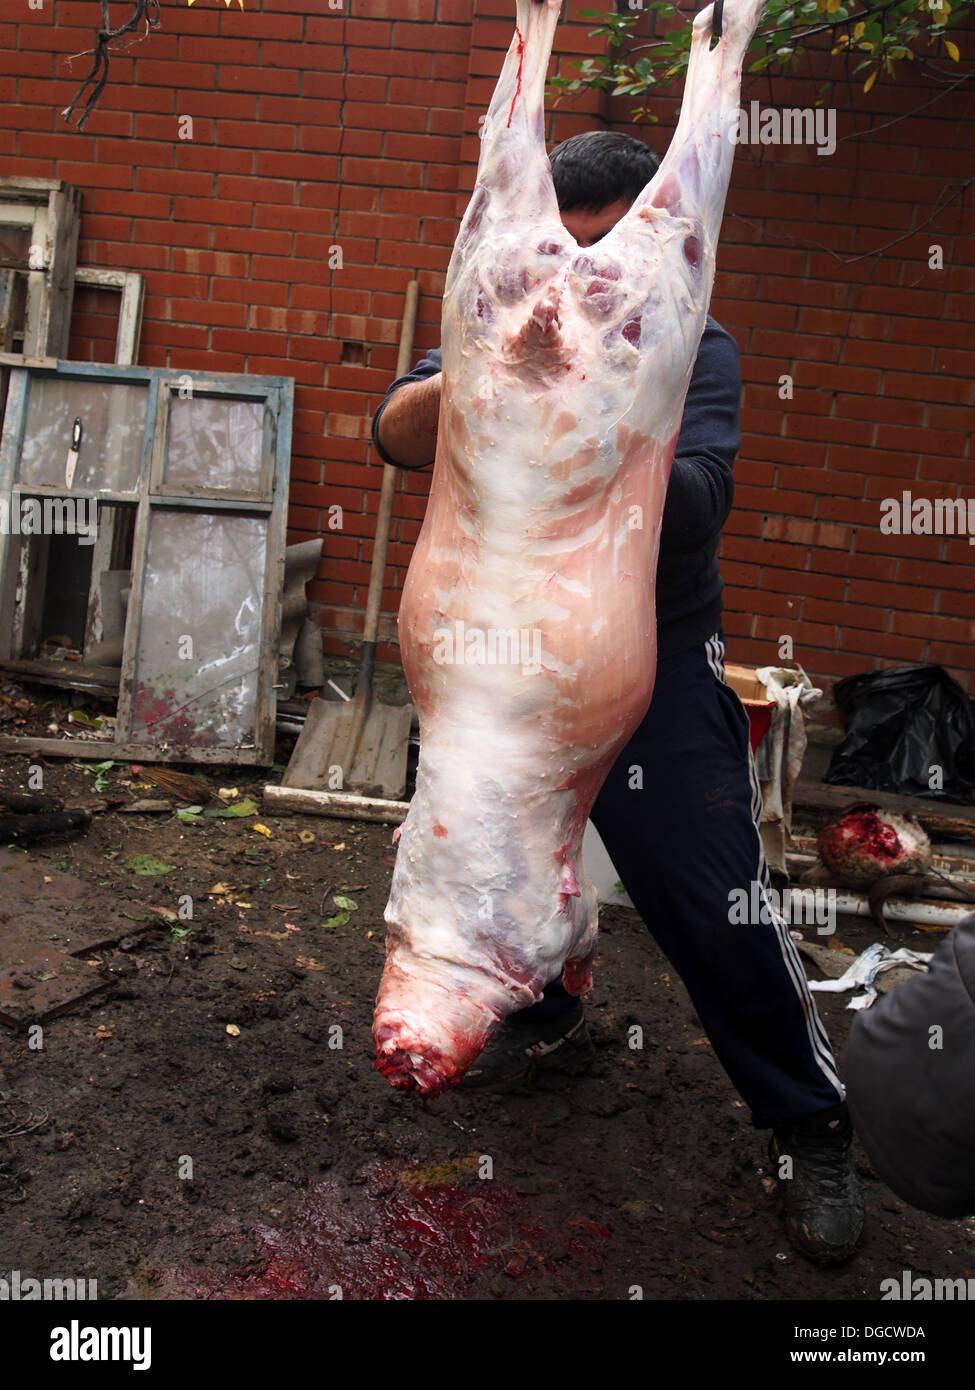 sacrifice of ram during celebration of Al-Adha Stock Photo